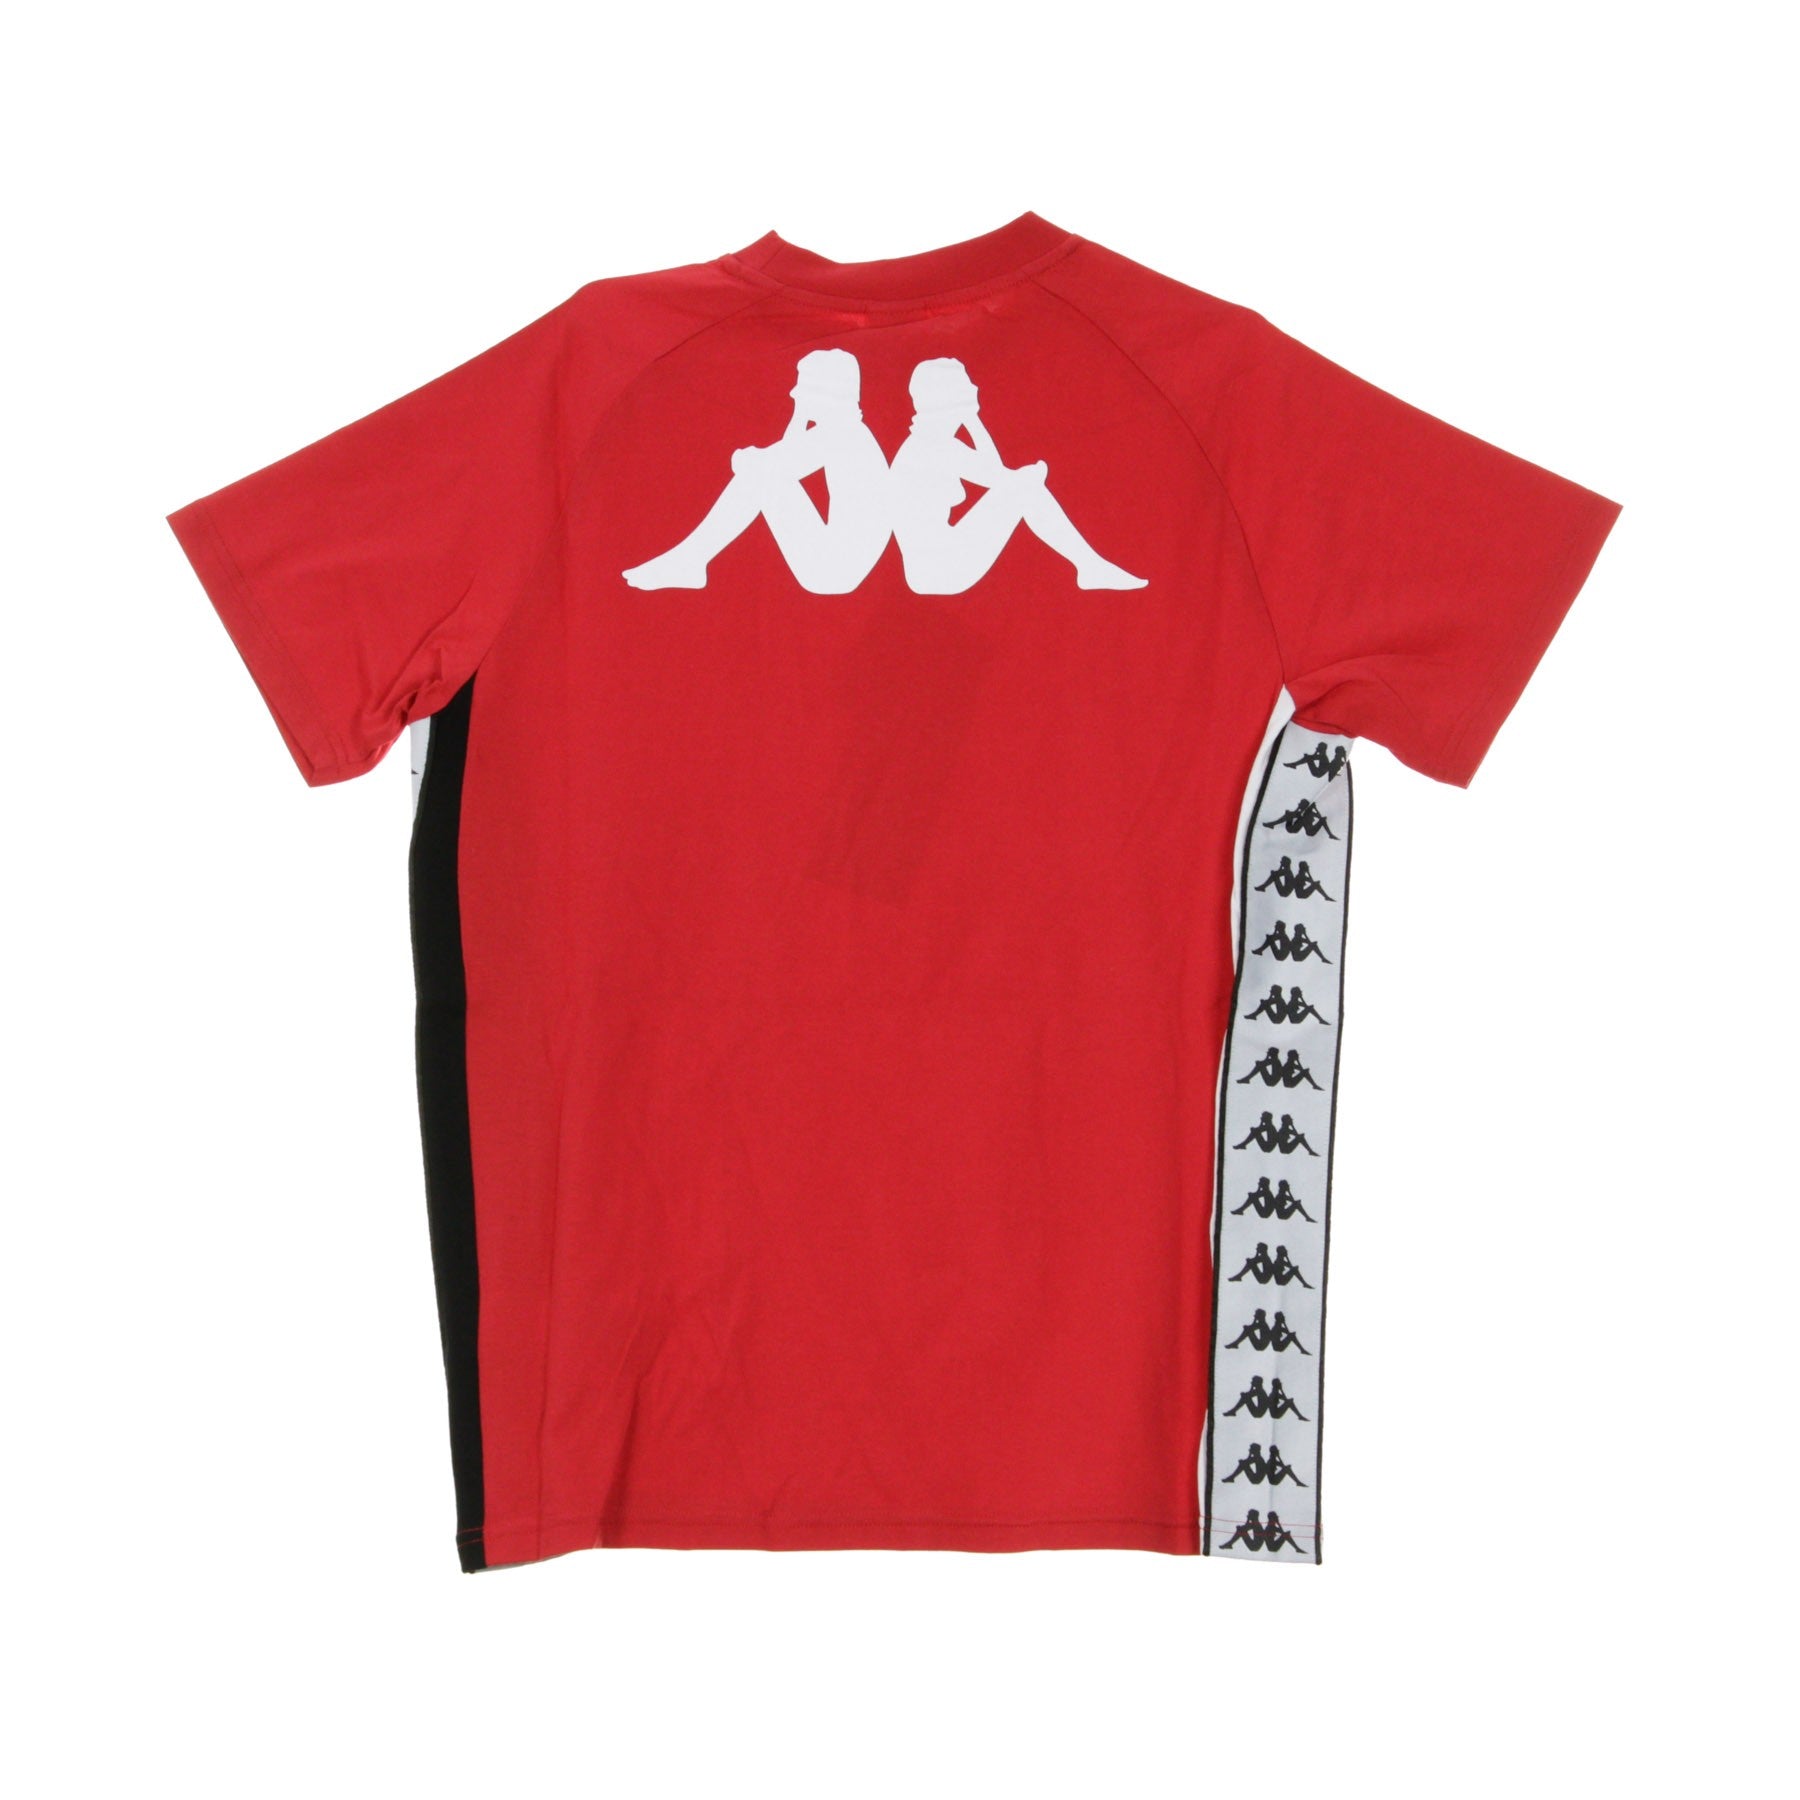 Authentic Balmin Red/black/white men's t-shirt